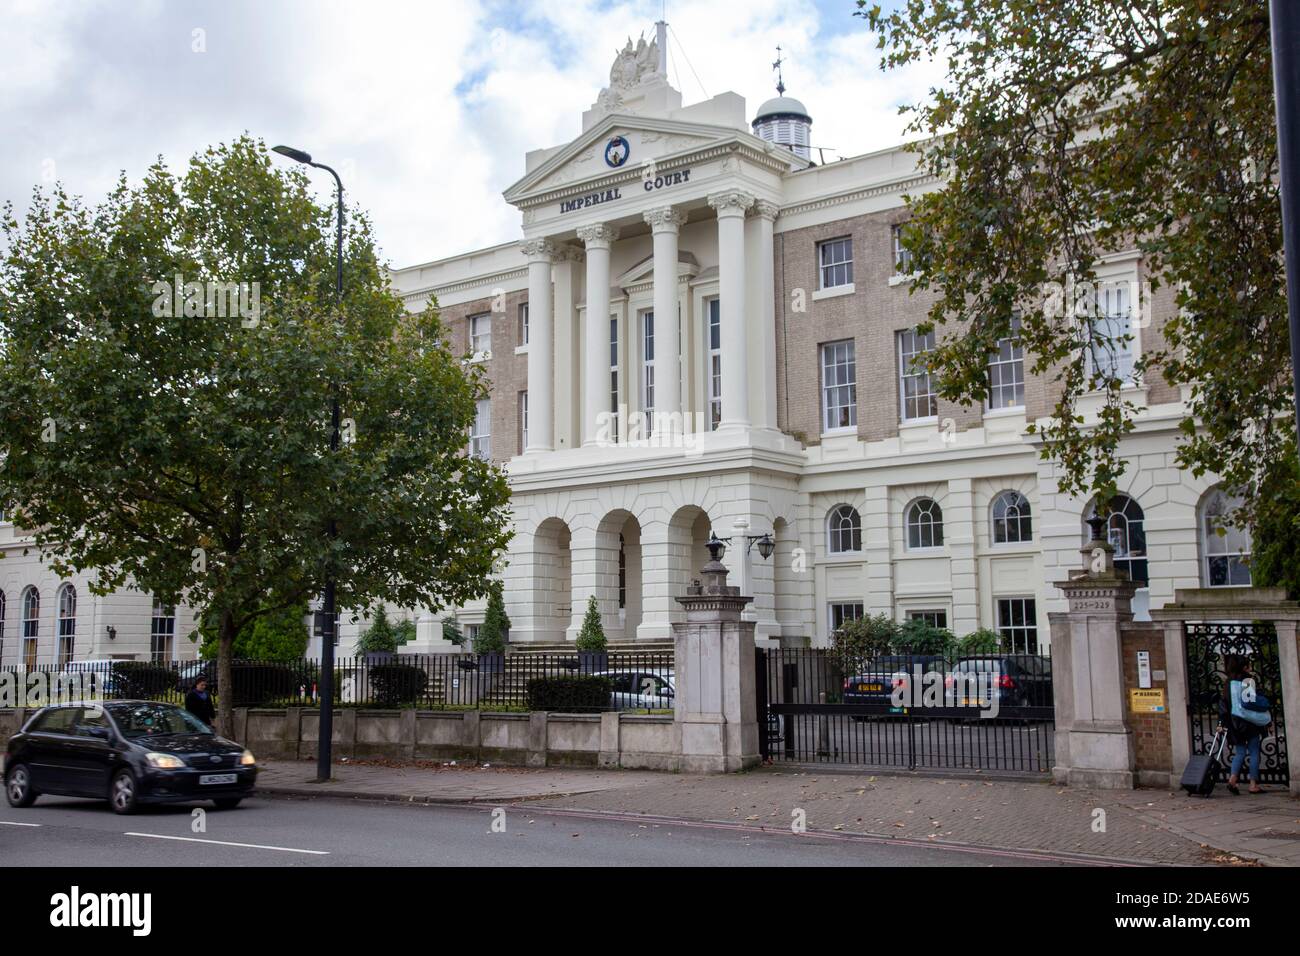 Imperial Court Apartments on Kennington Lane in London UK Stock Photo